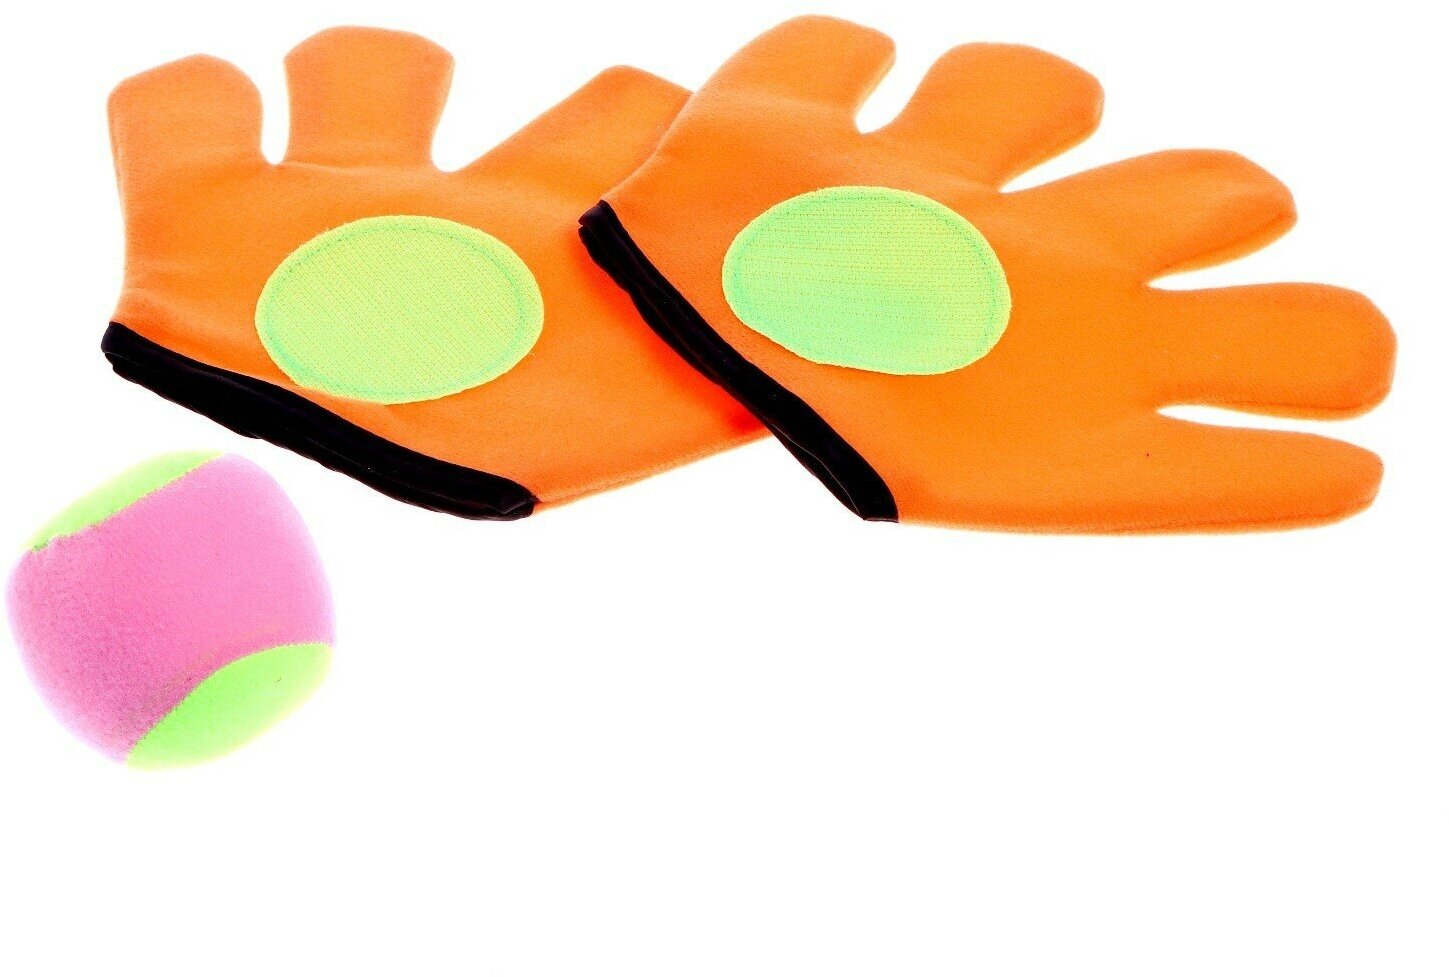 Игра «Кидай-поймай», 2 перчатки-ловушки для мяча, 1 мяч, цвета микс